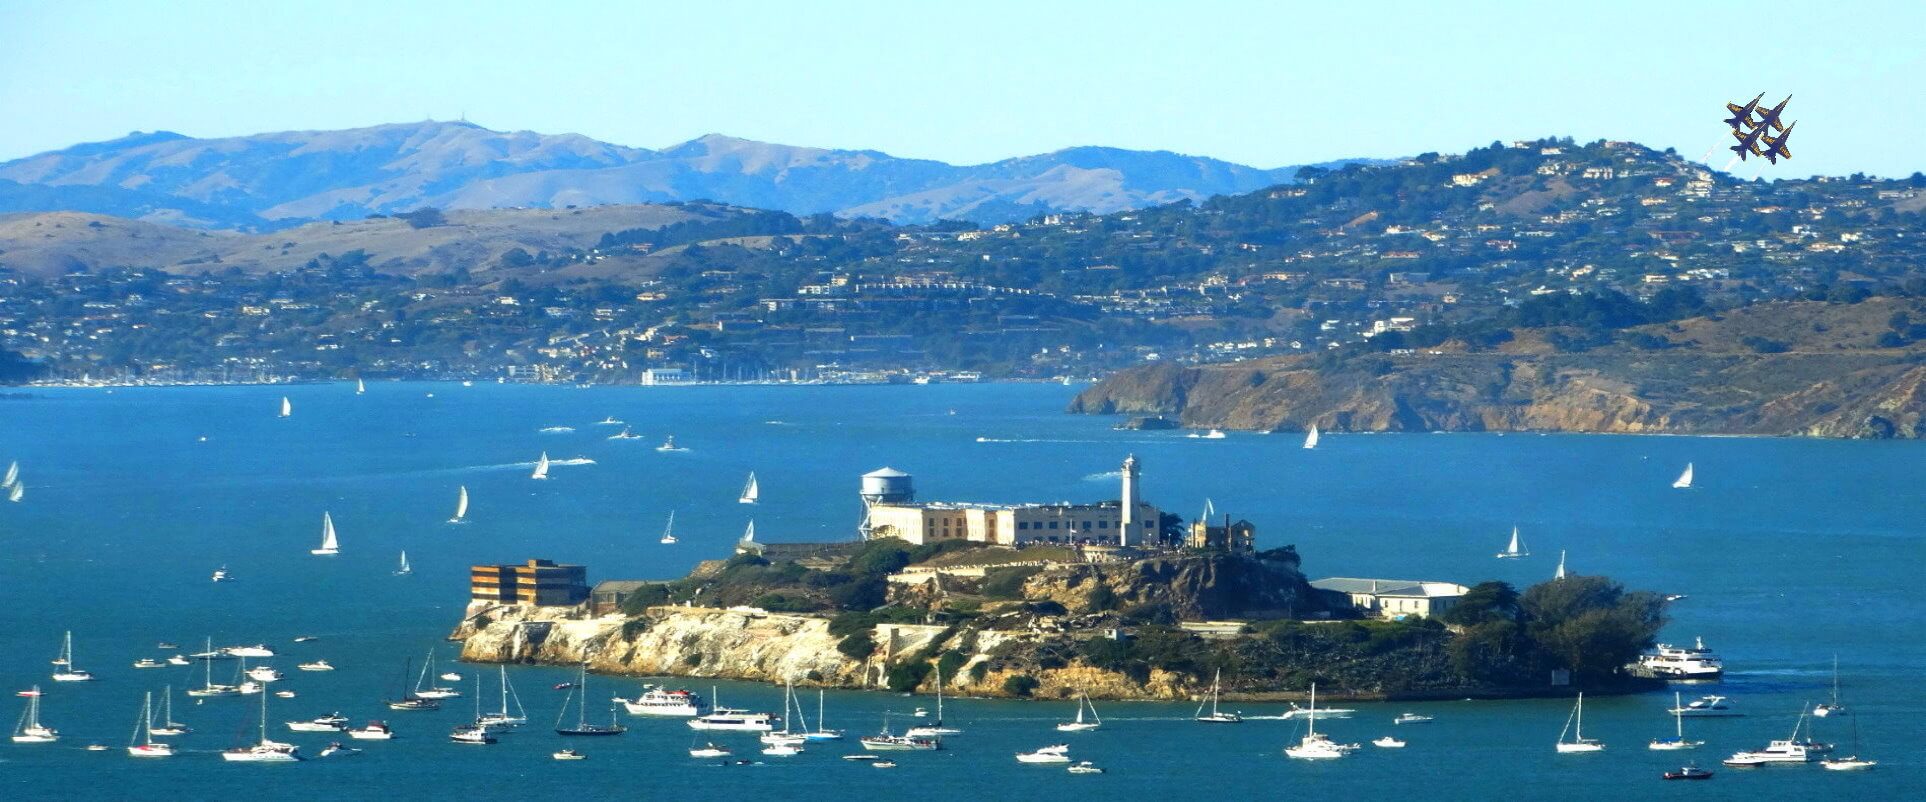 visit-alcatraz-island-and-prison-in-the-san-francisco-bay